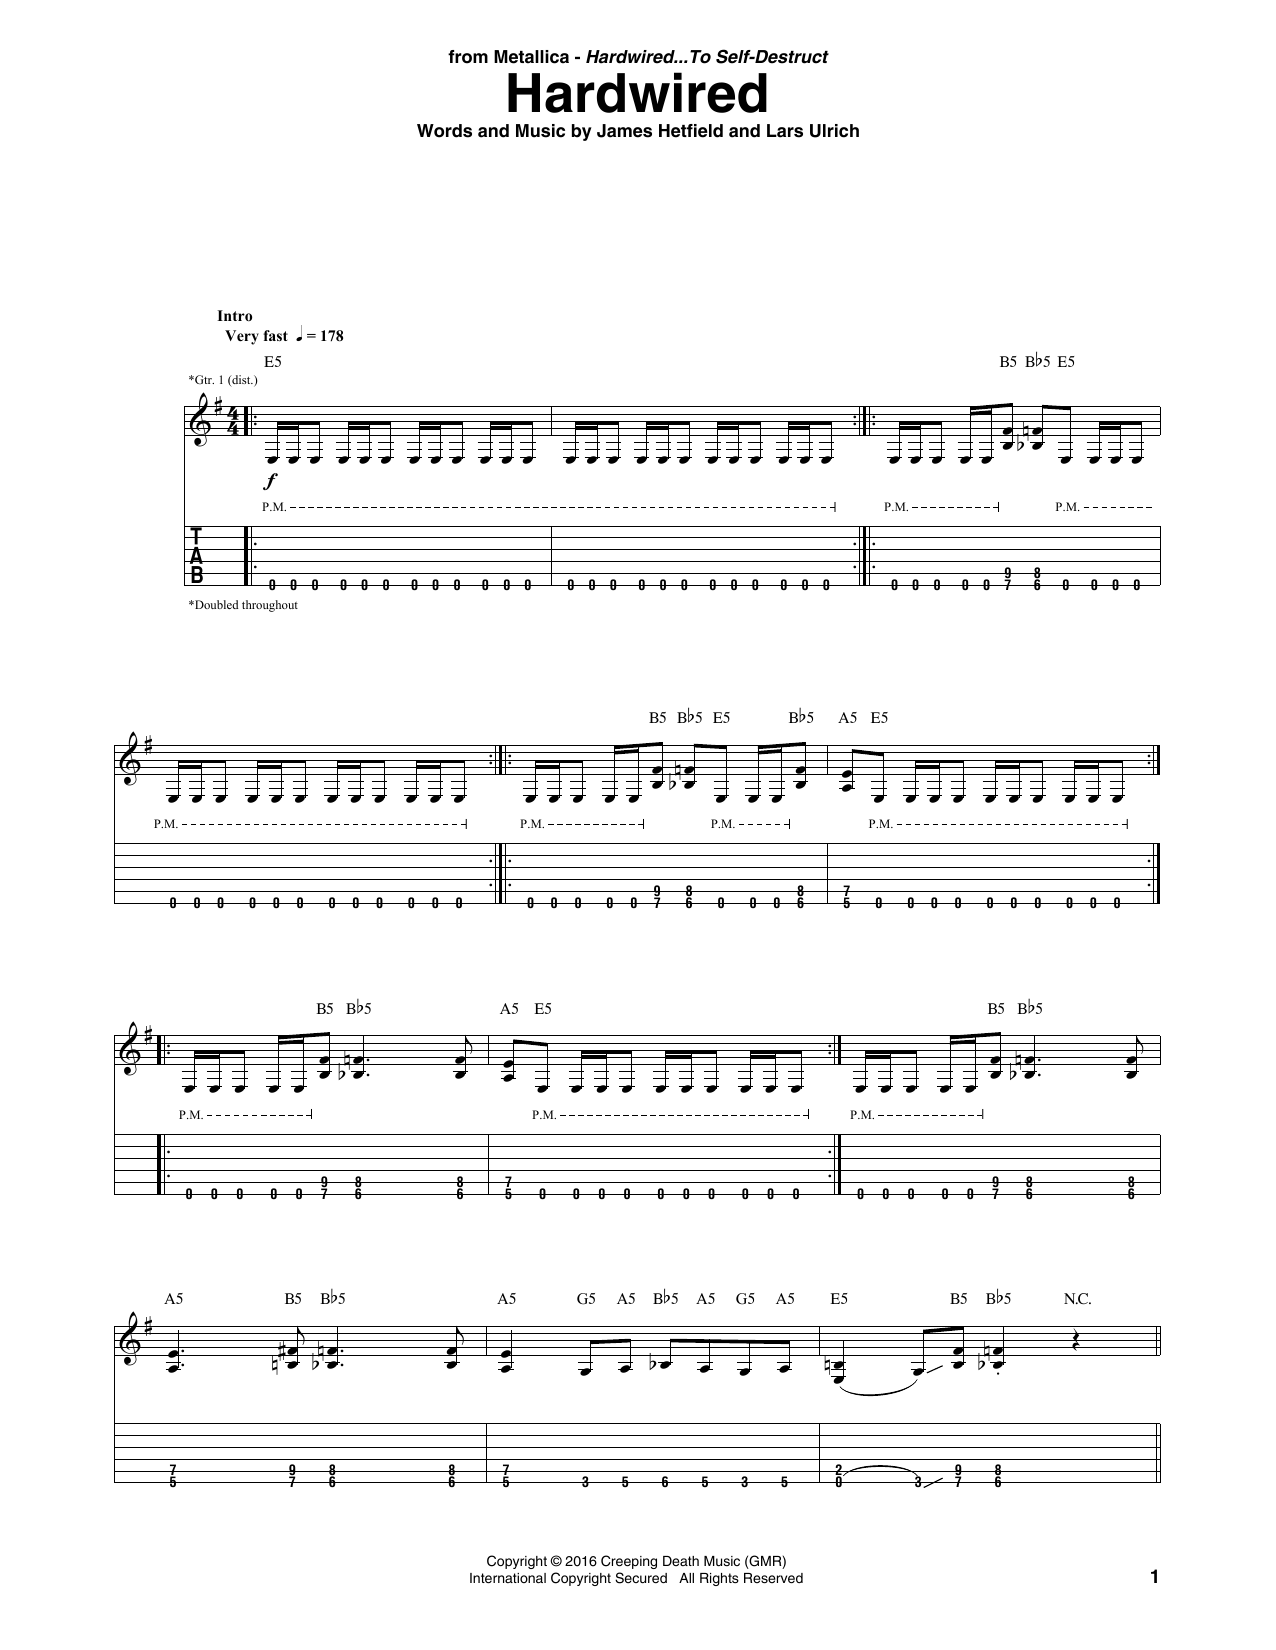 Metallica Hardwired Sheet Music Notes & Chords for Guitar Tab - Download or Print PDF